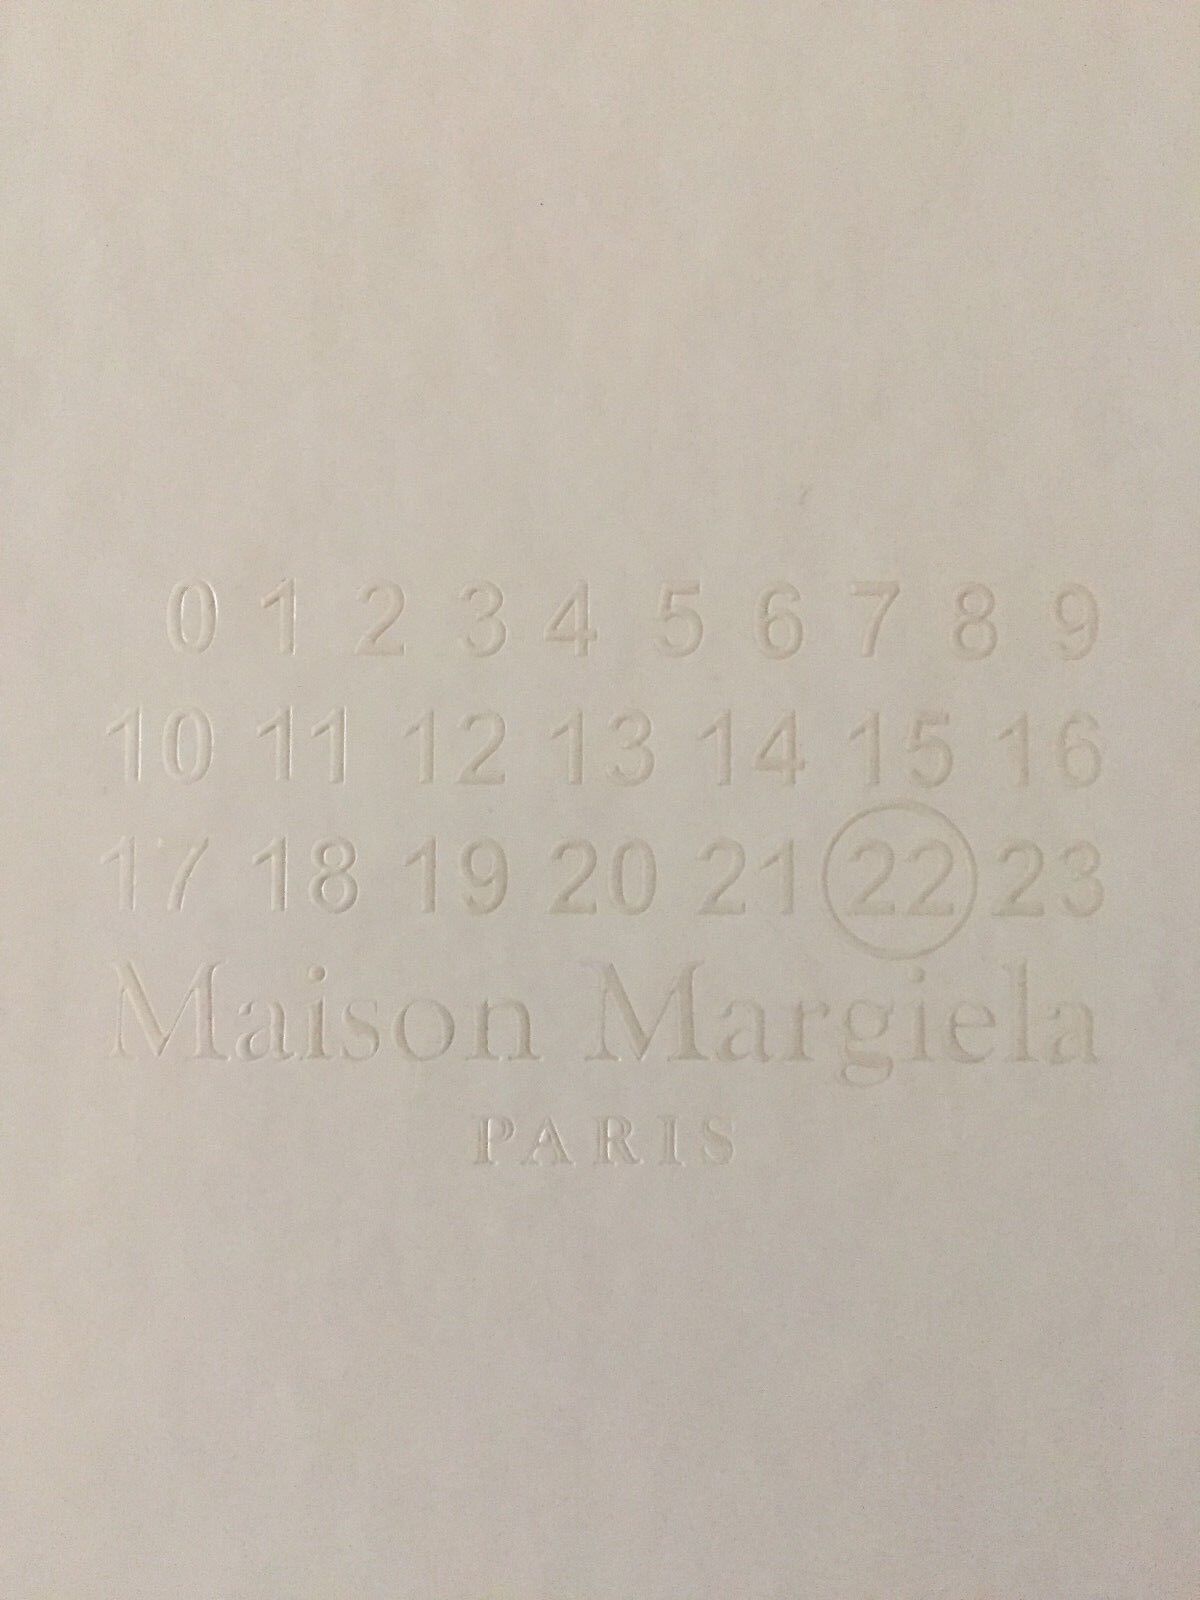 Maison Margiela Wallpapers - Top Free Maison Margiela Backgrounds ...